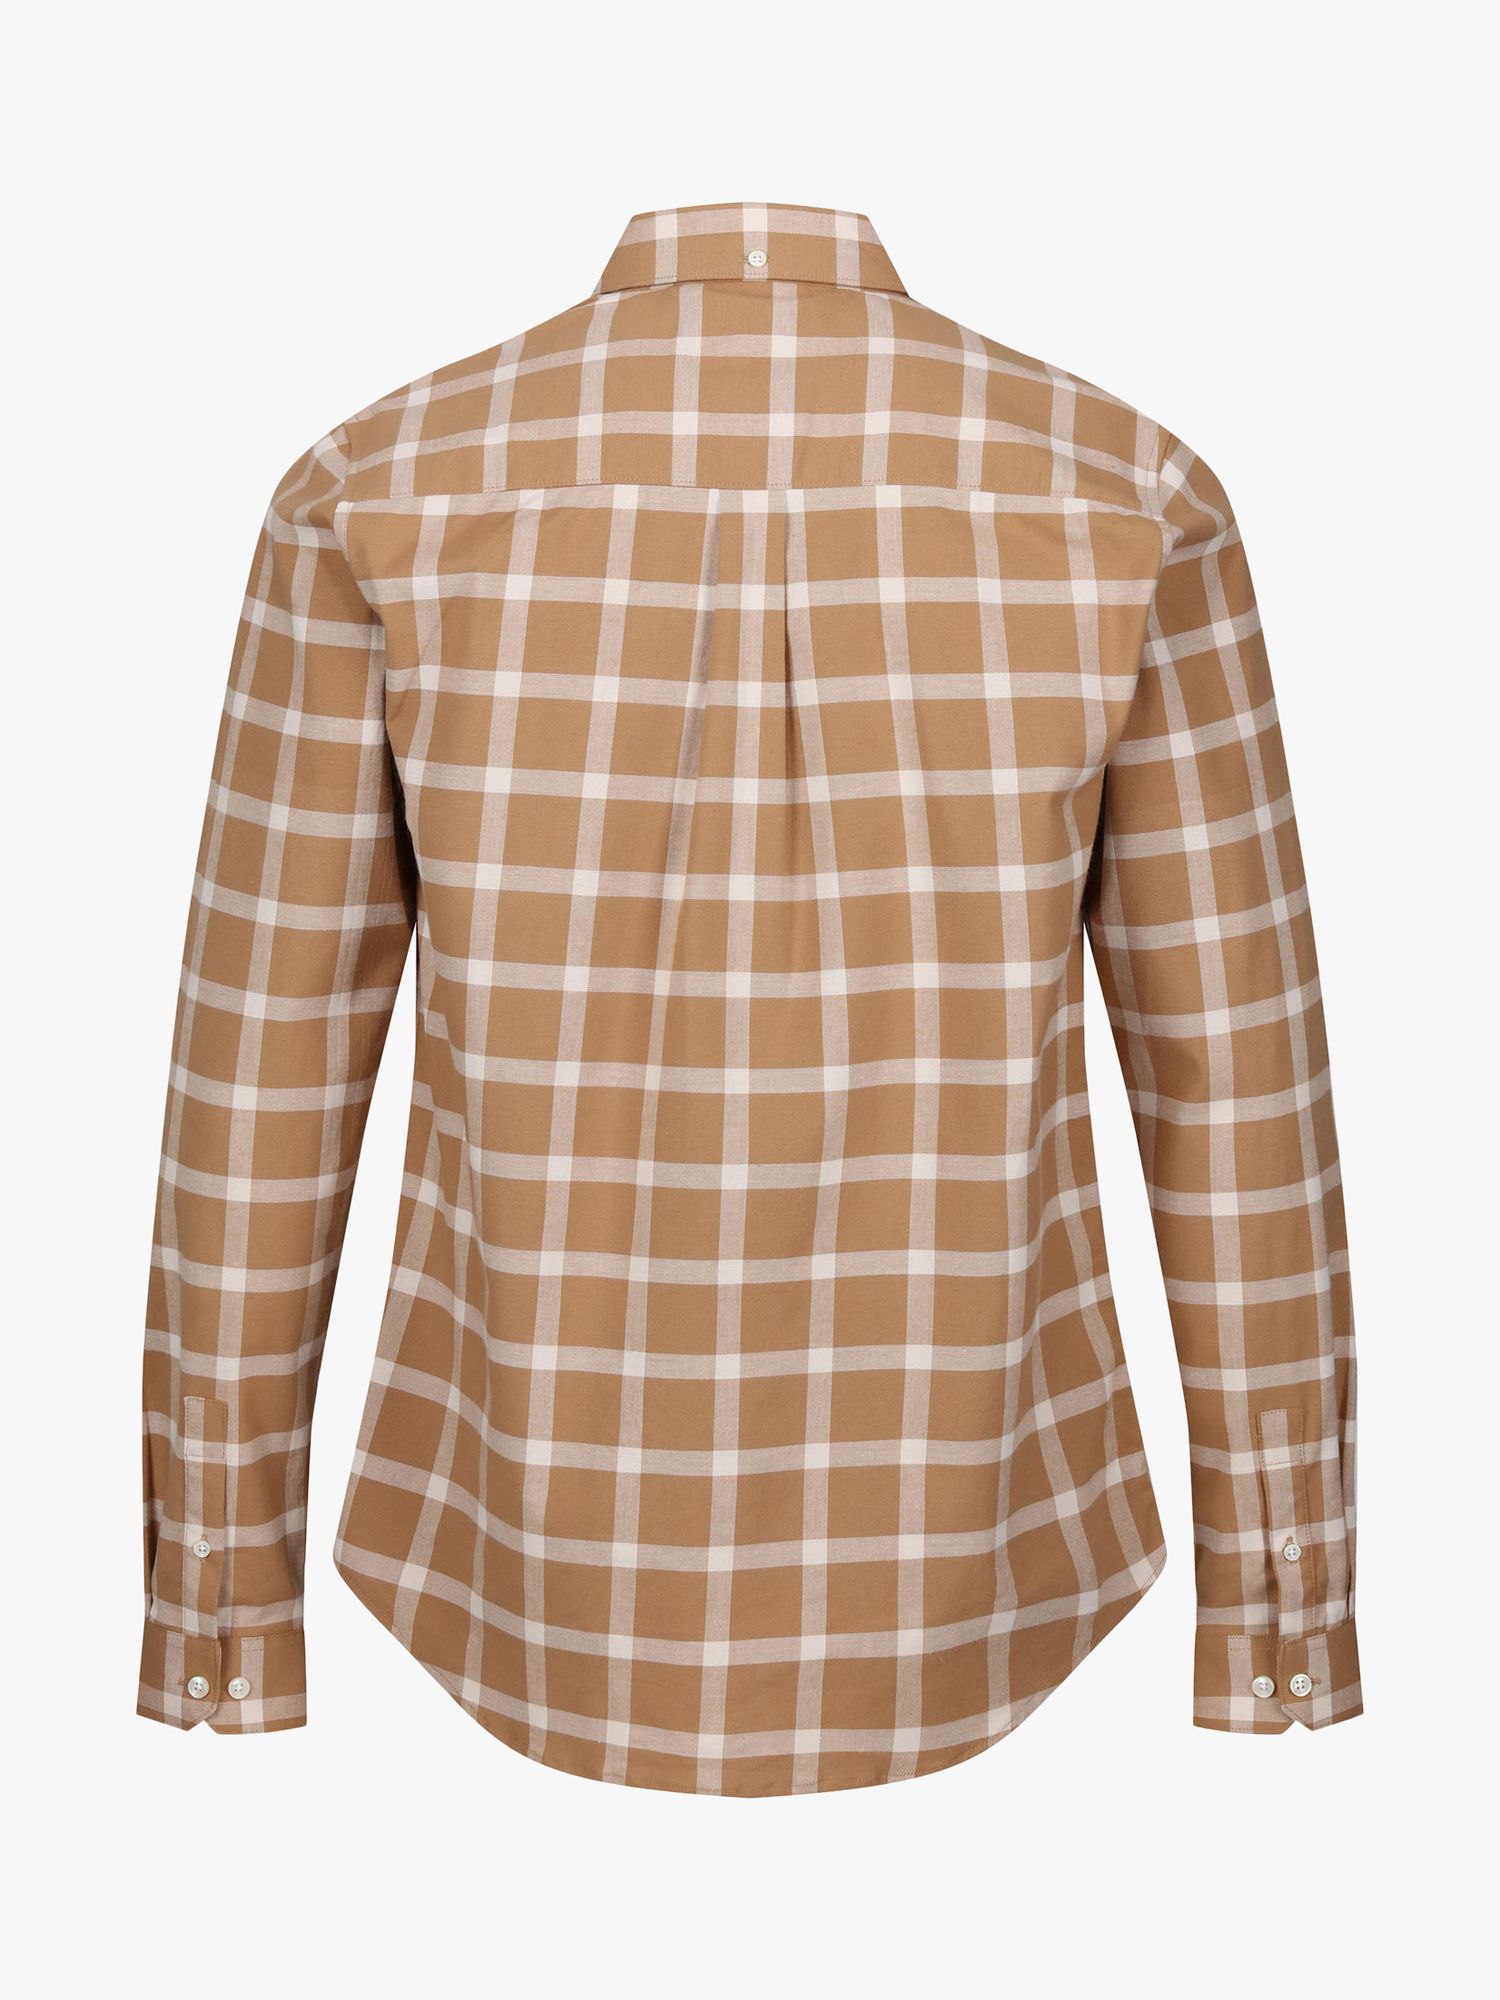 LUKE 1977 Long Sleeve Check Oxford Shirt, Ecru/Caramel, S